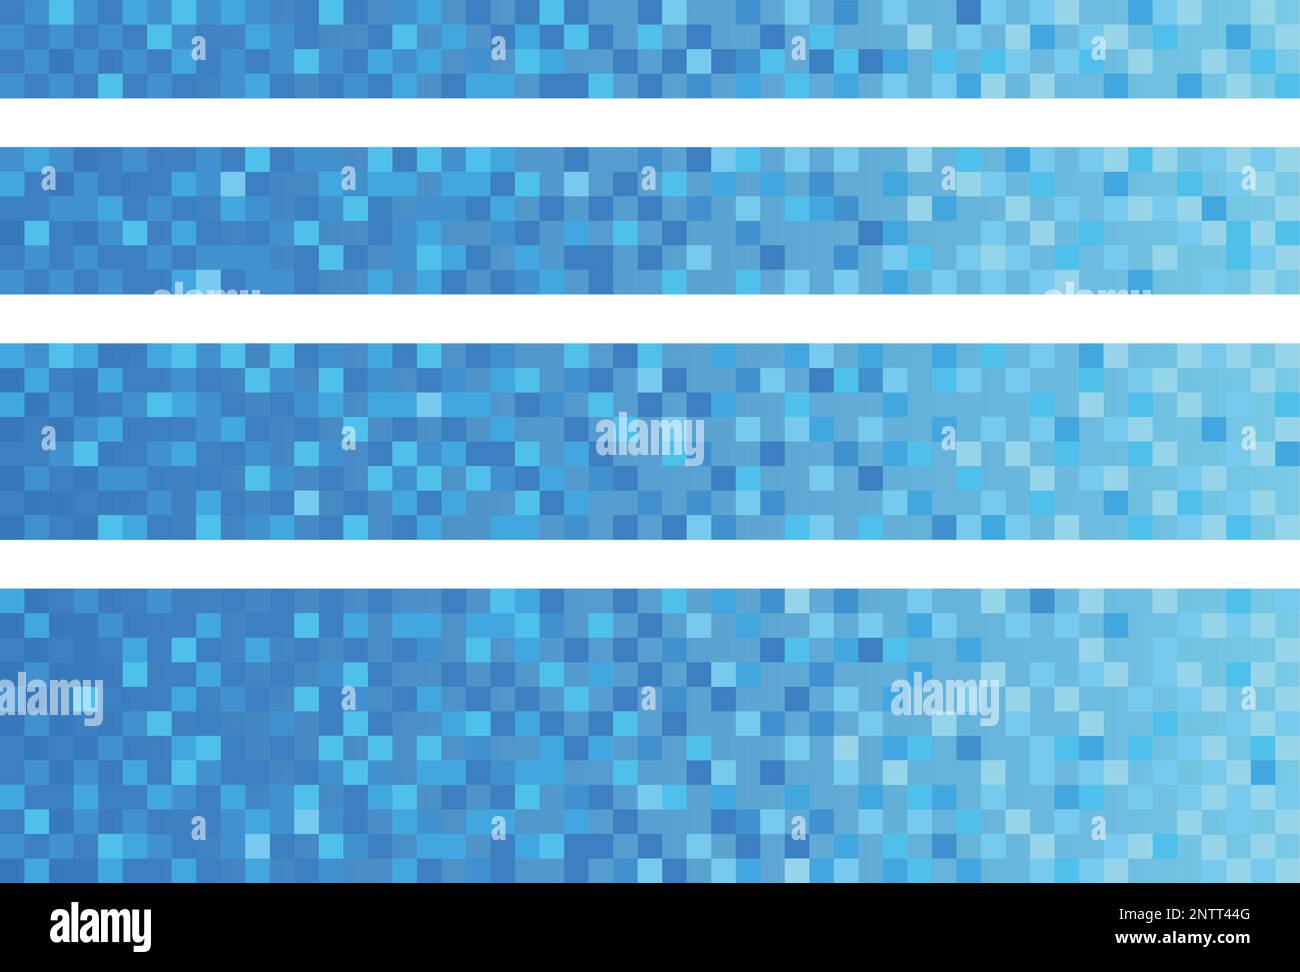 Vector Blue Pixel Texture Illustration. Computer And Digital Technology ...